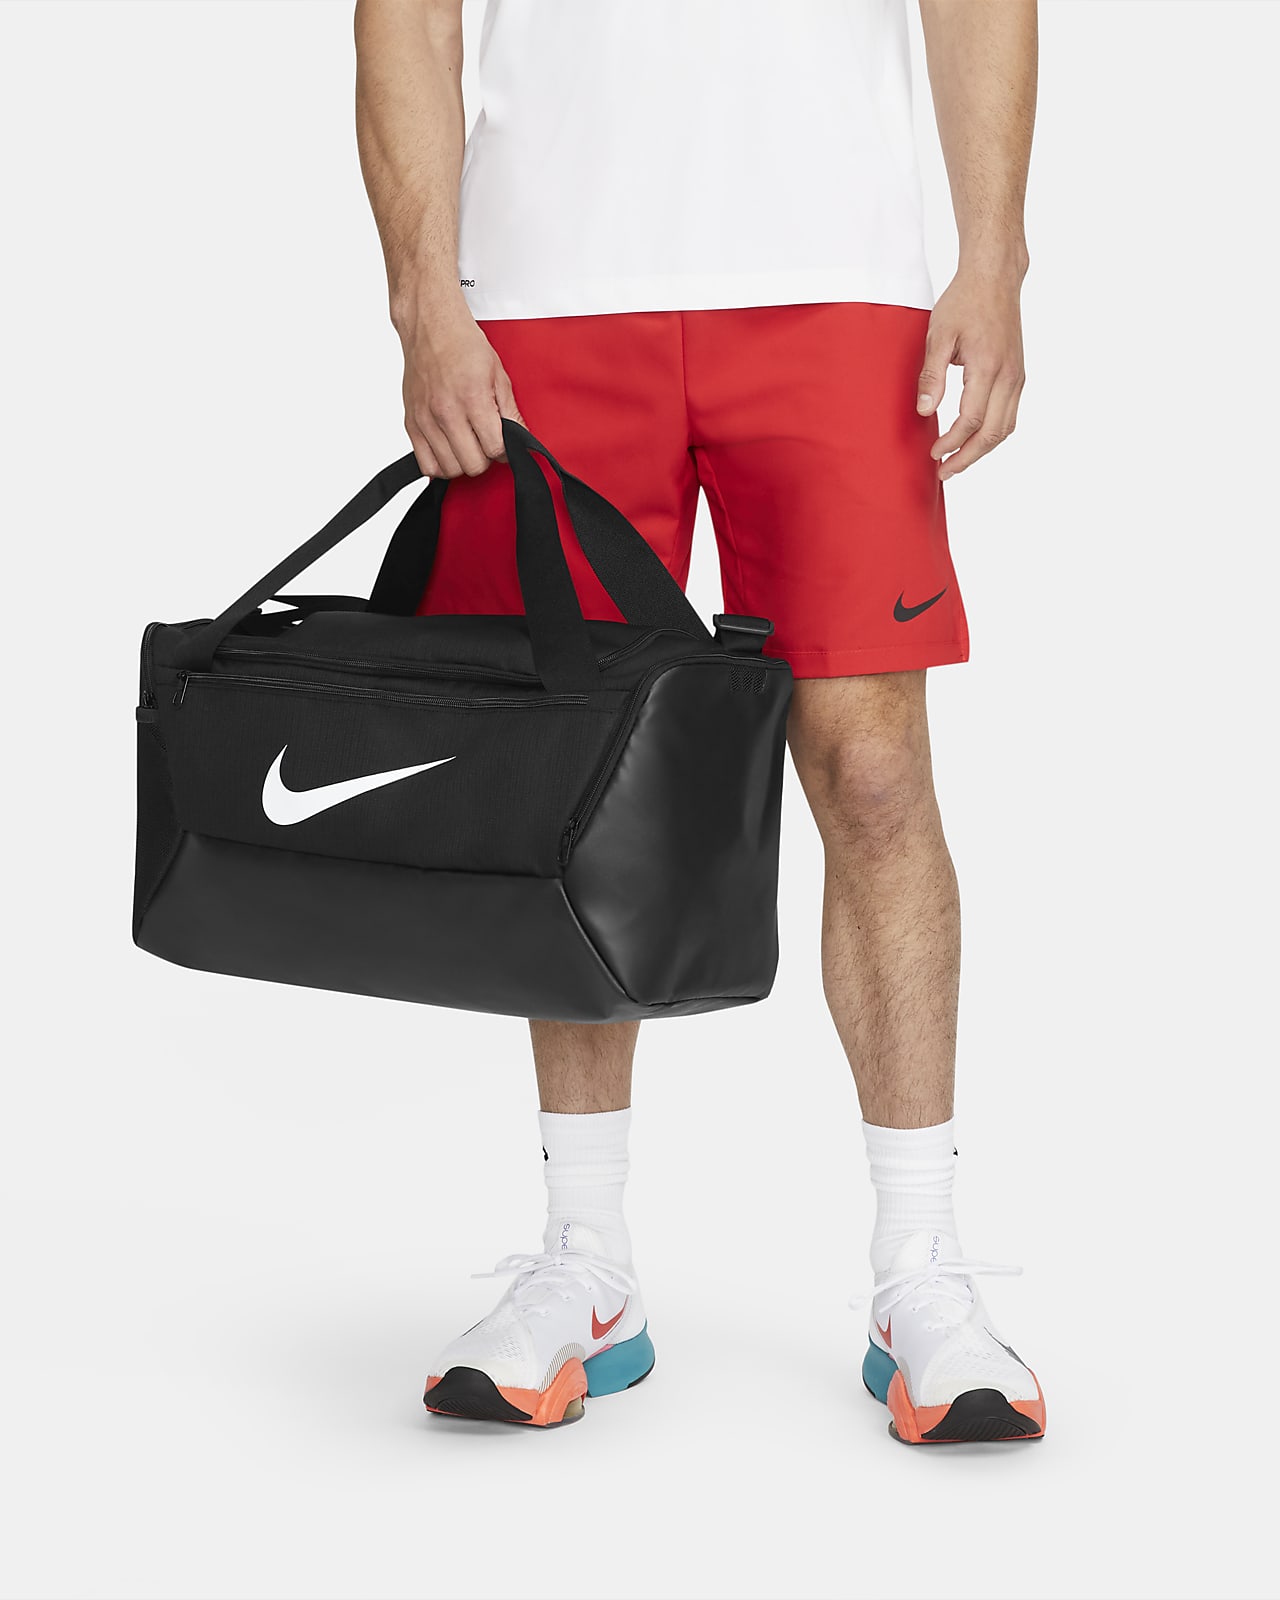 Saco de desporto Nike Brasilia 9,5 (pequeno, 41 L)